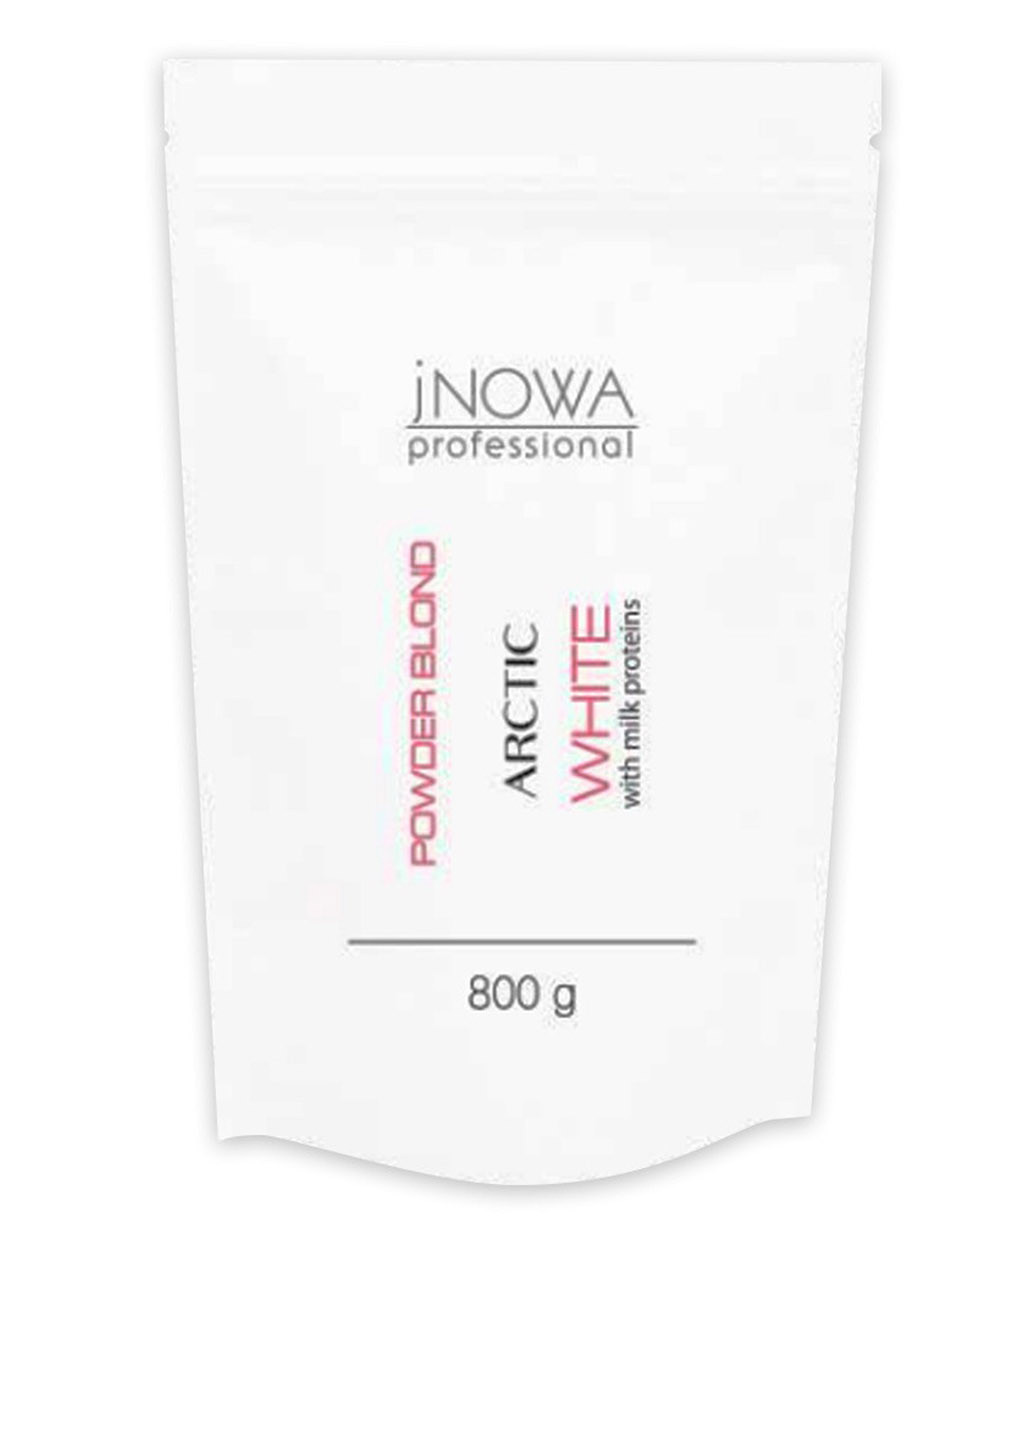 Пудра для волосся осветляющая з протеїнами молока Arctic, 800 г jNOWA Professional (75835233)